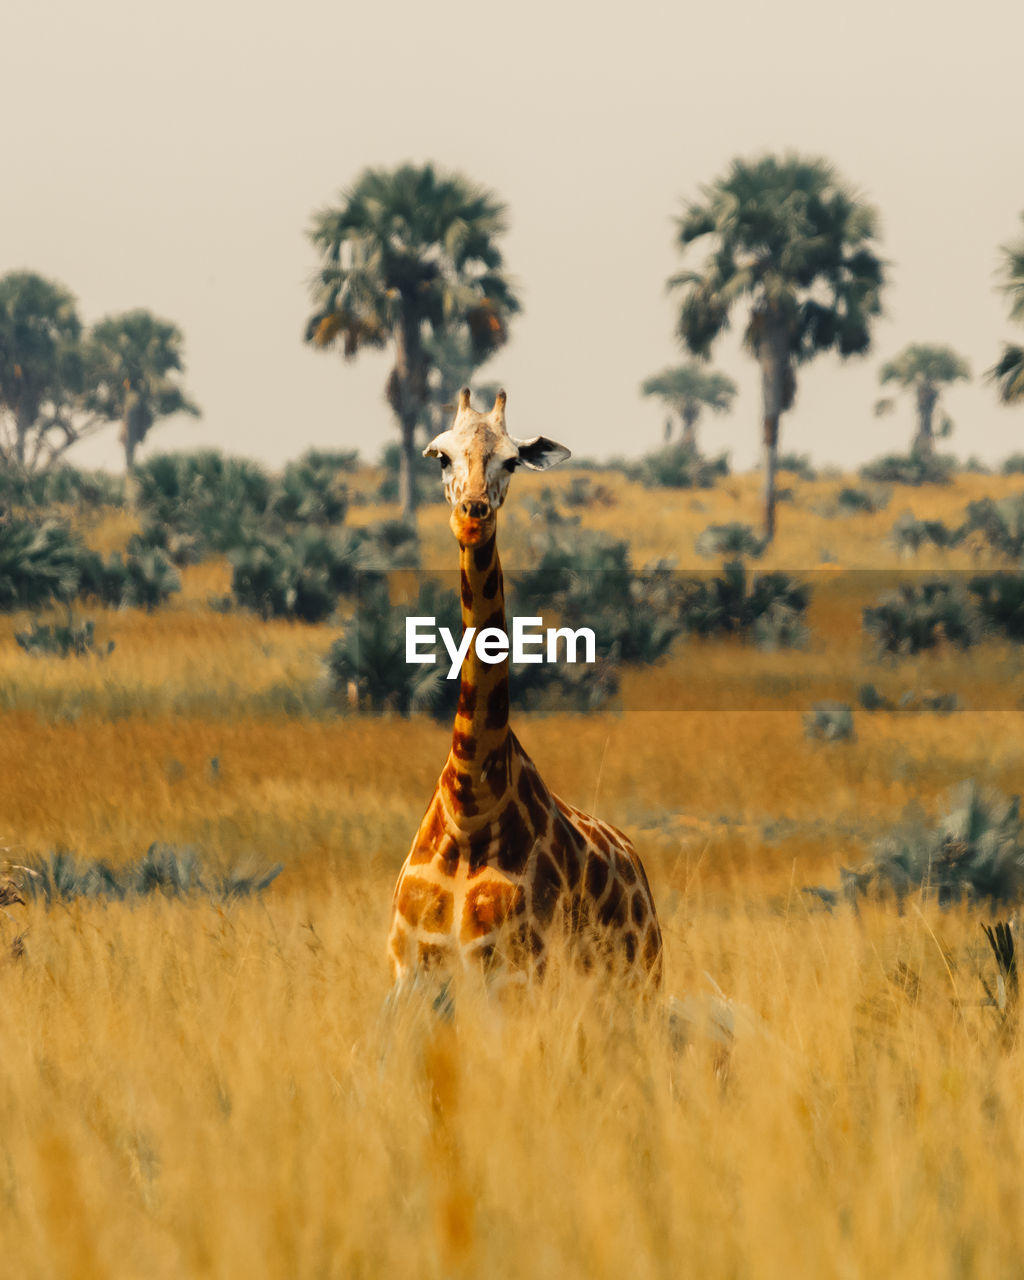 Portrait of giraffe on grassy field